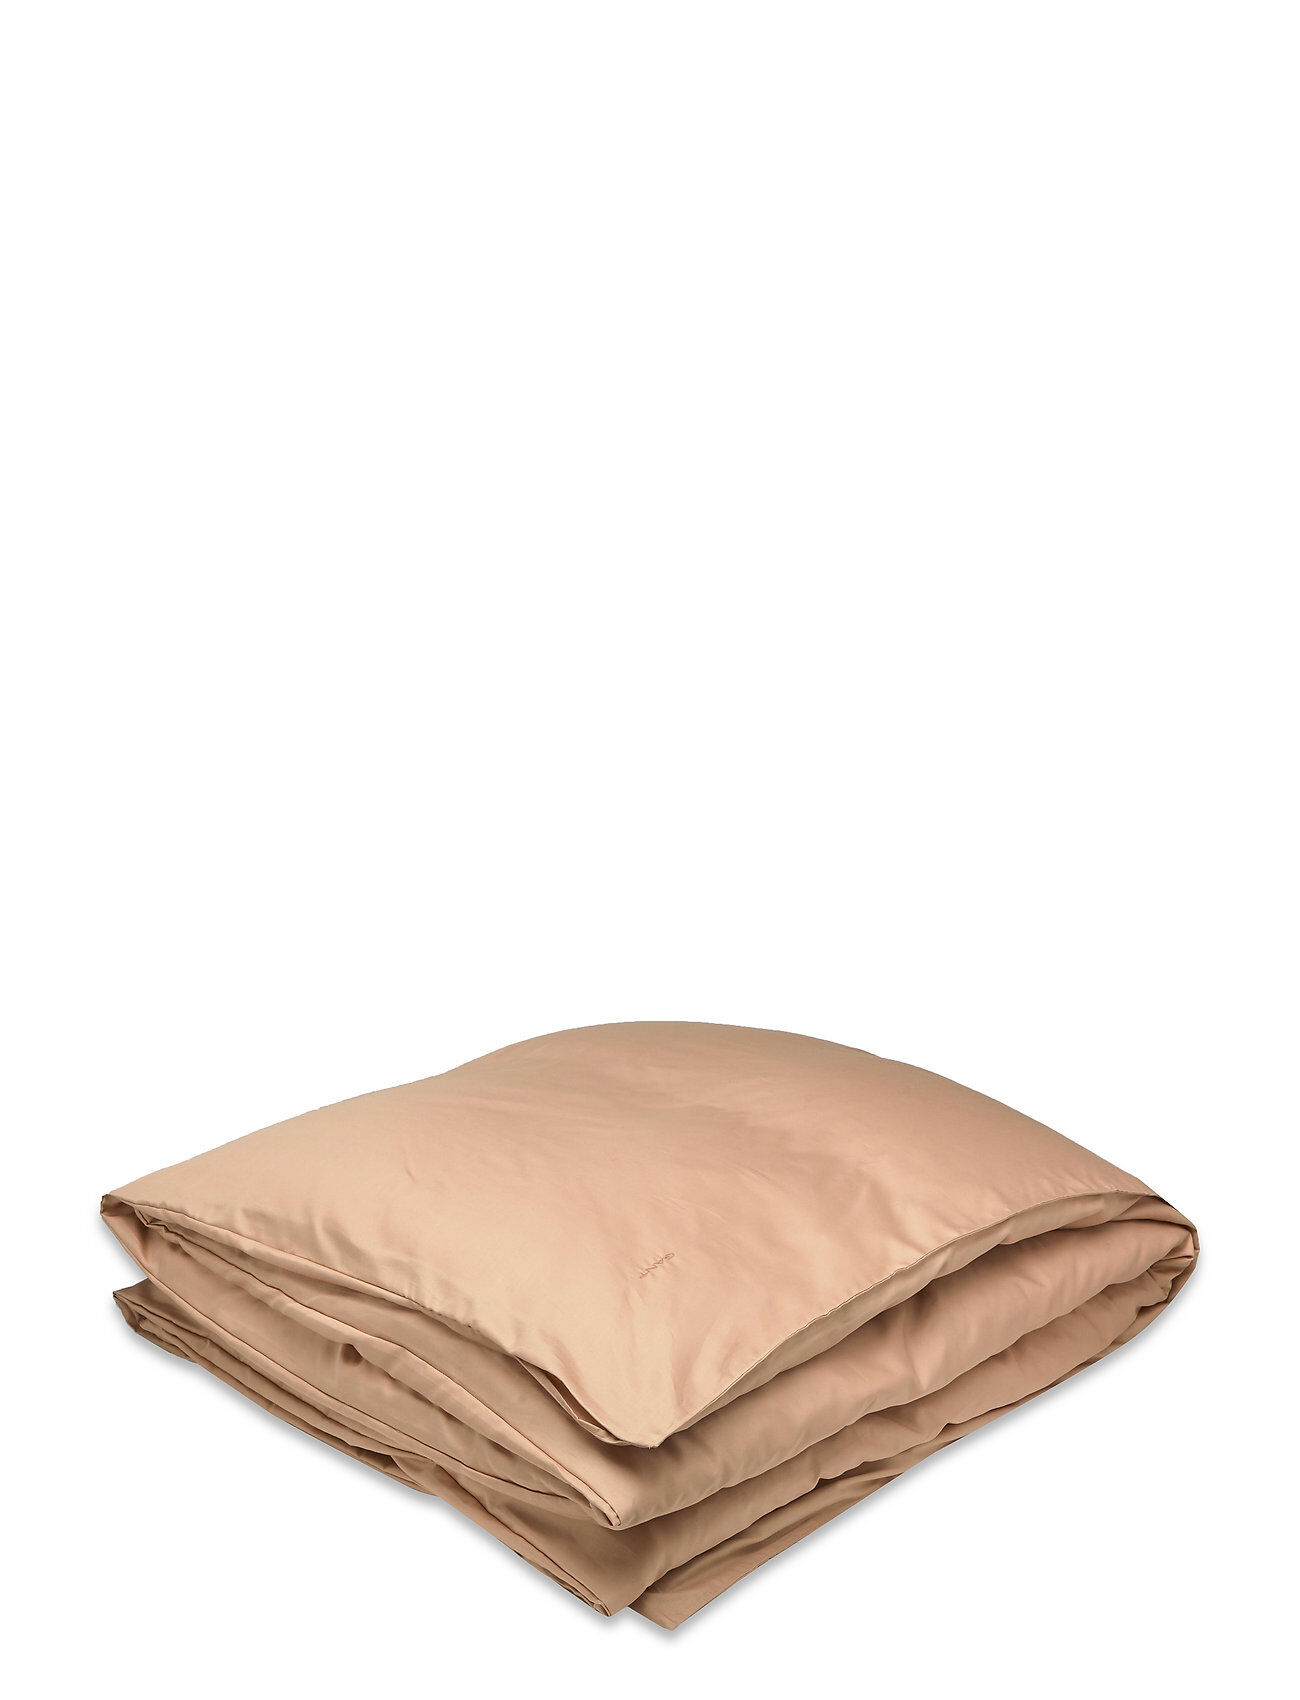 GANT Sateen Single Duvet Home Textiles Bedtextiles Duvet Covers Beige GANT